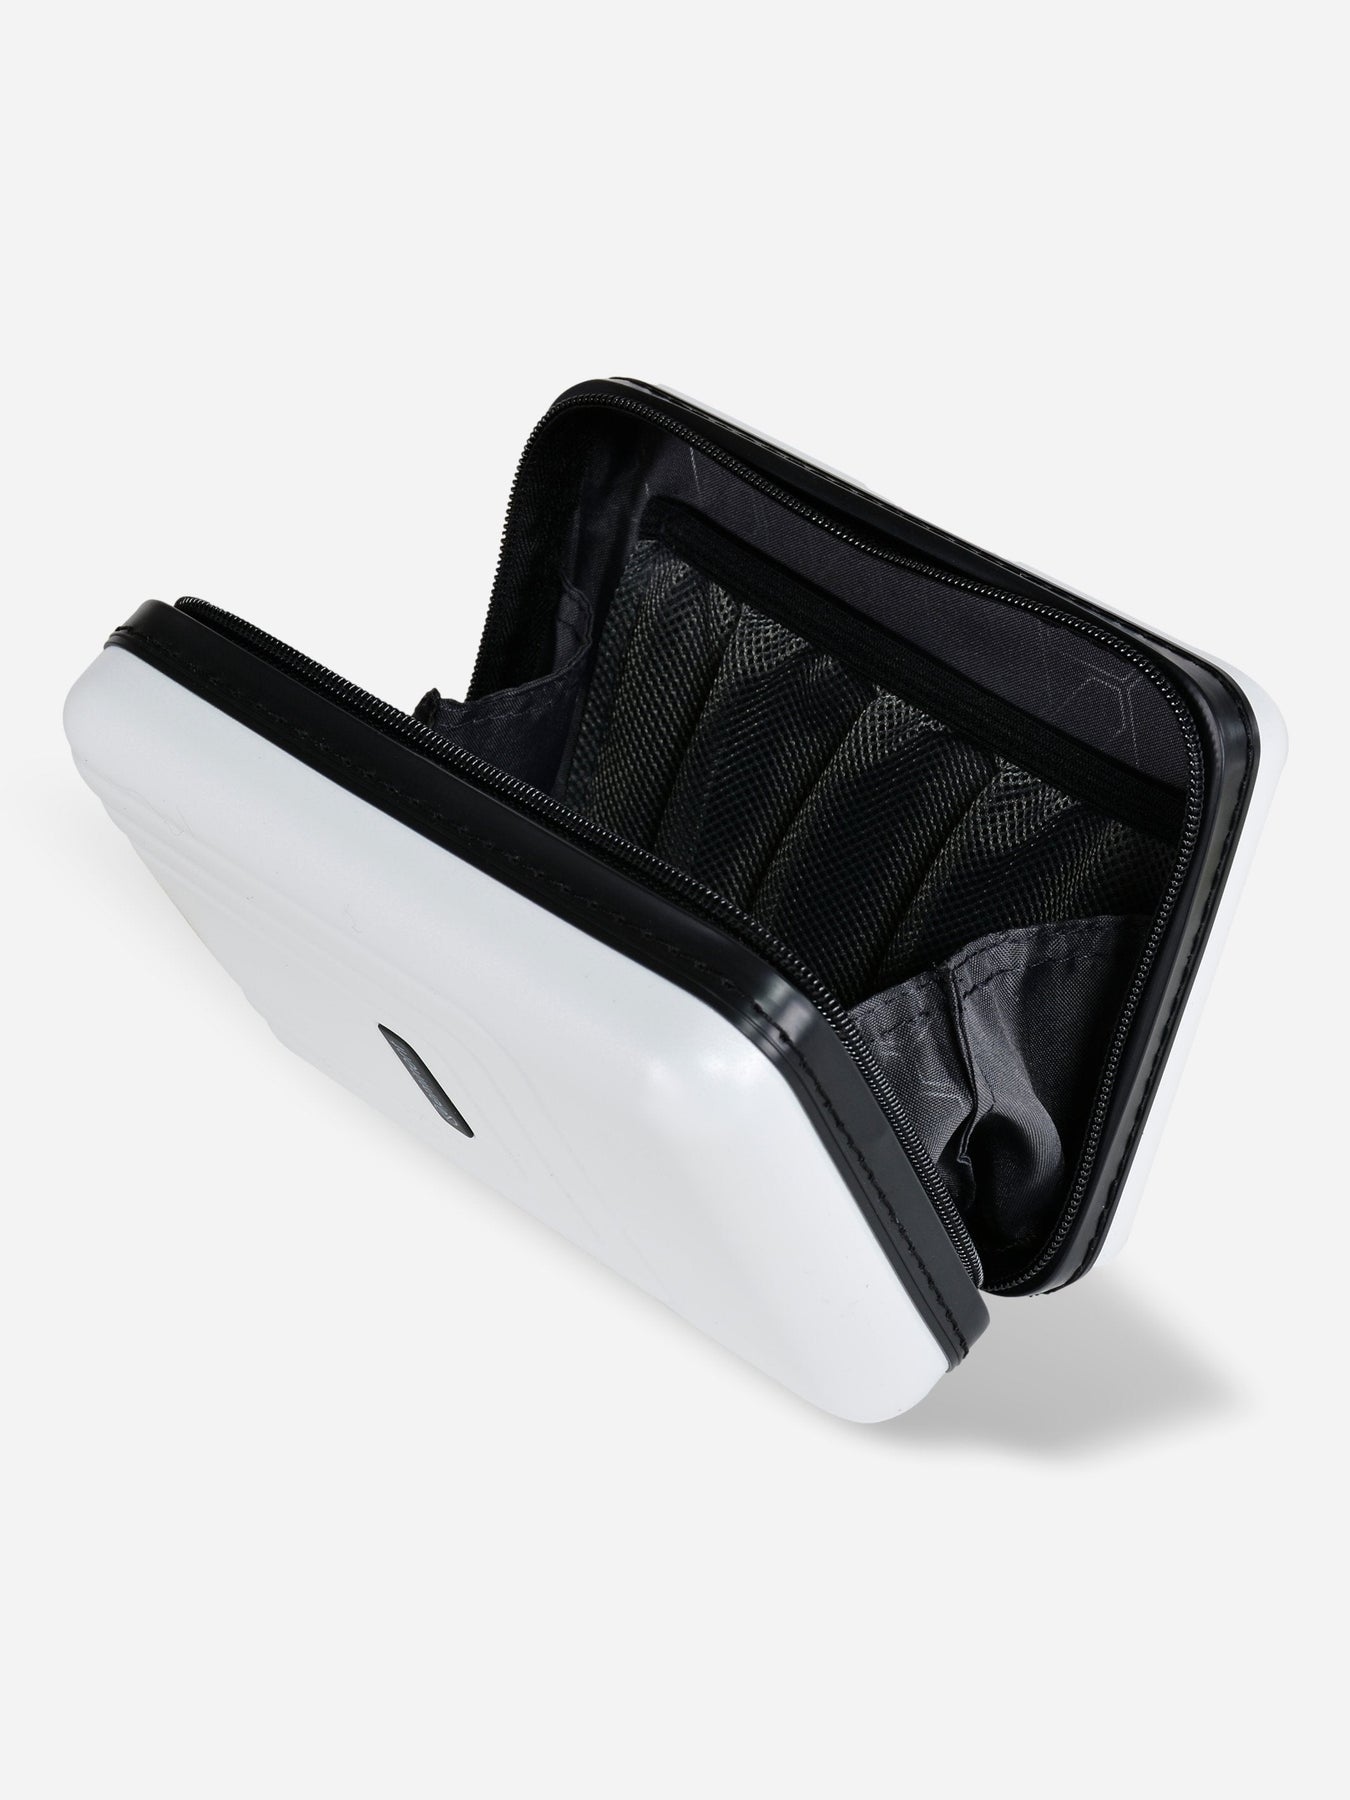 Gemline 101039 - Mobile Office Hybrid Toiletry Bag $7.54 - Bags